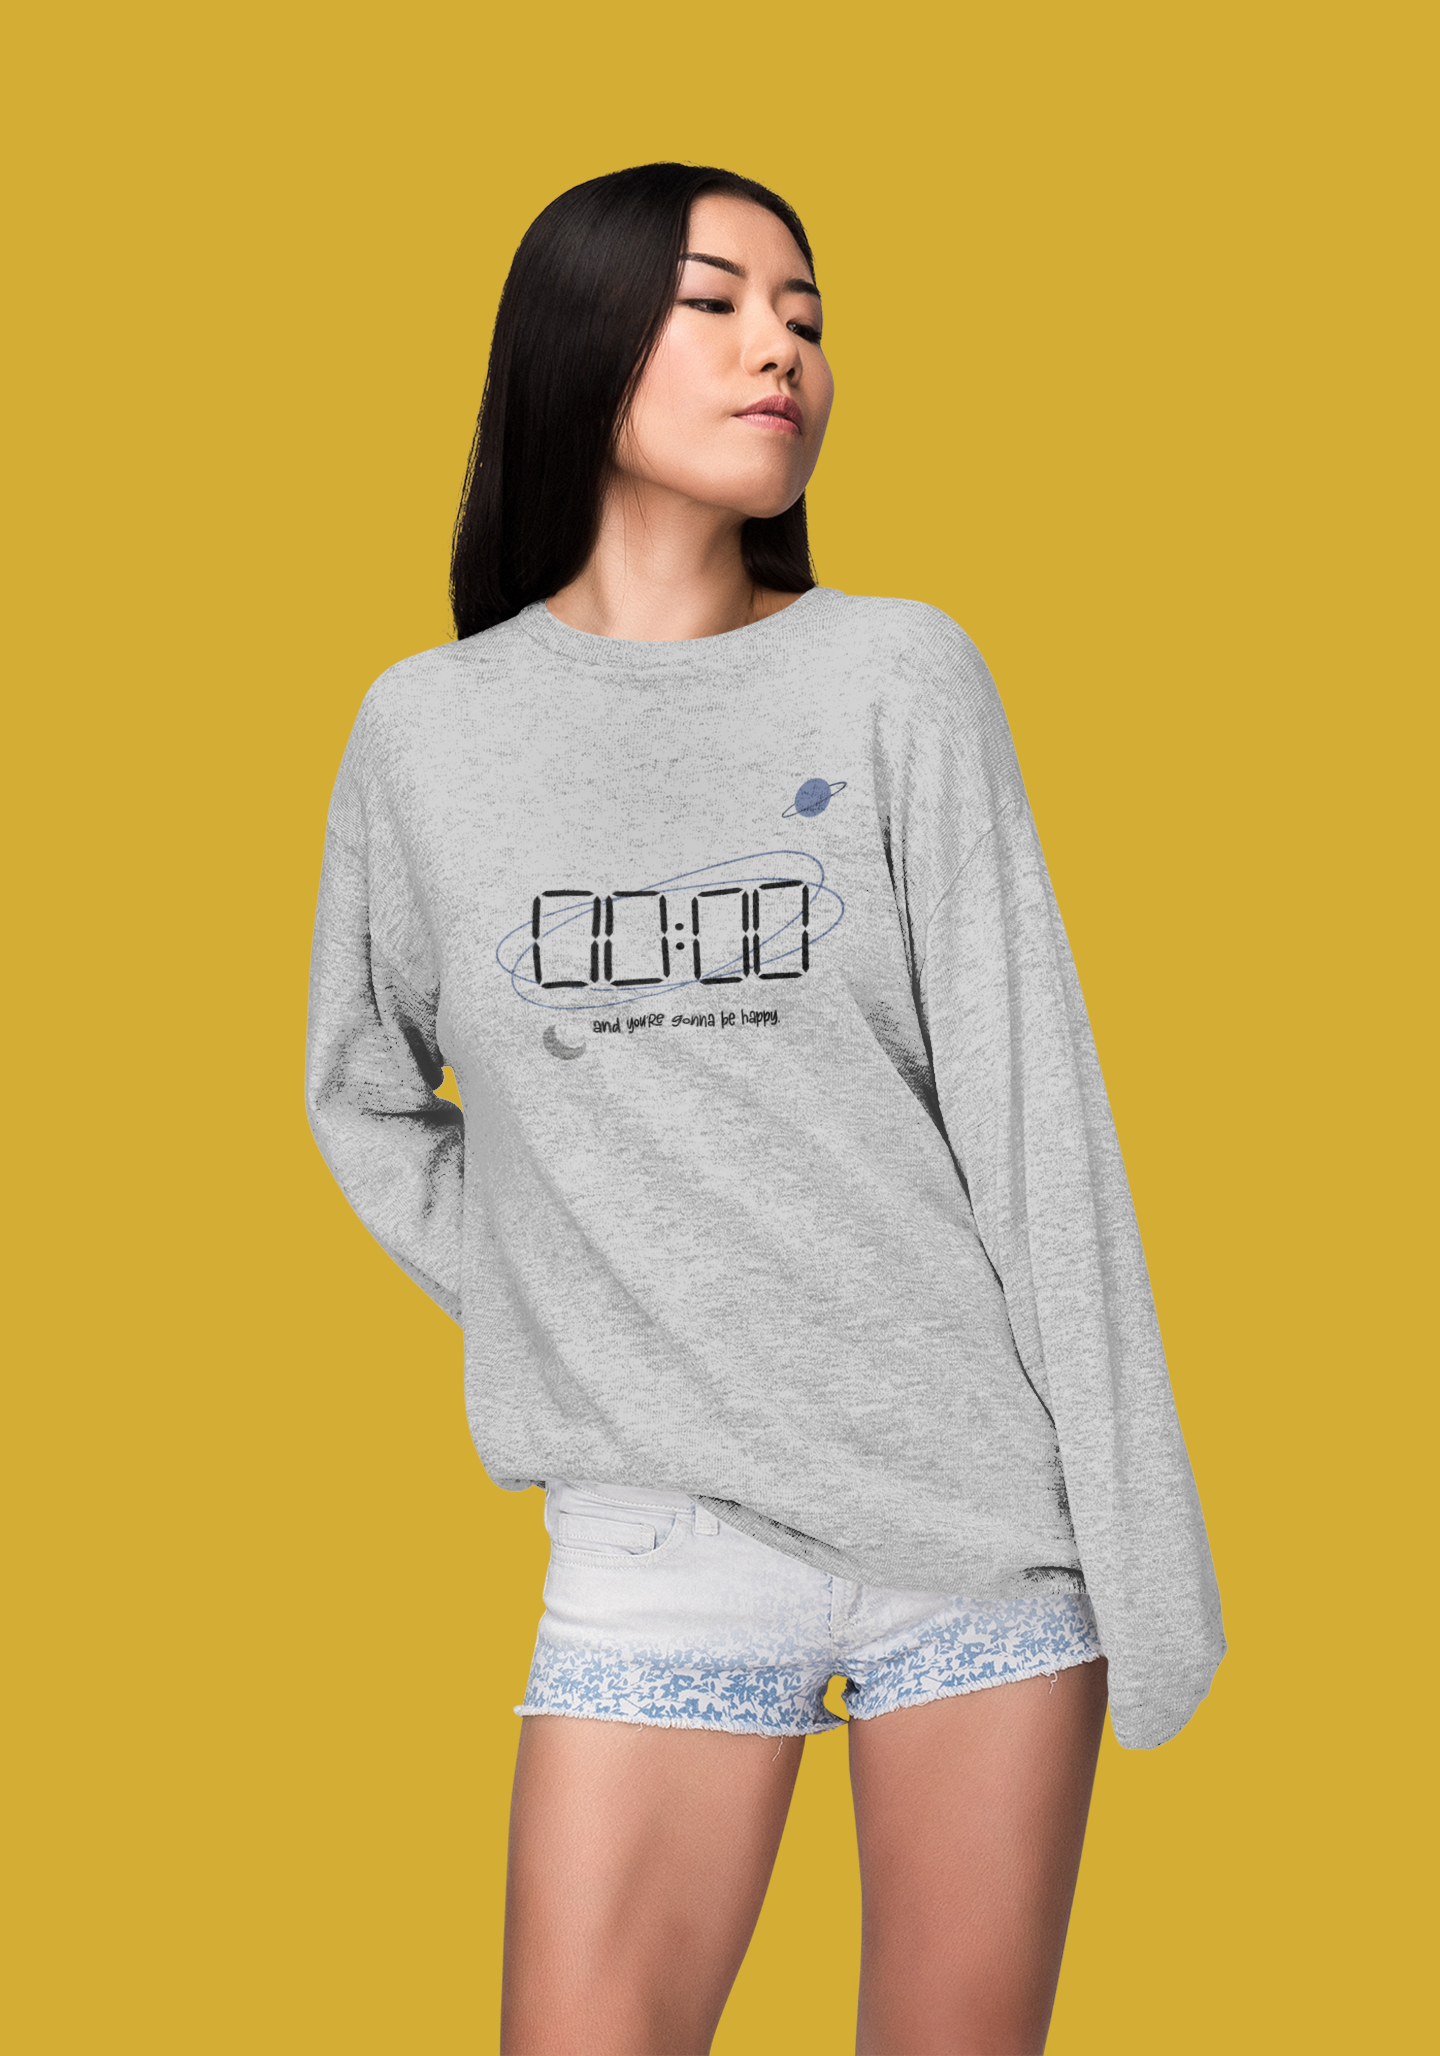 Zero O' Clock- And you're gonna be happy : BTS - Winter Sweatshirts